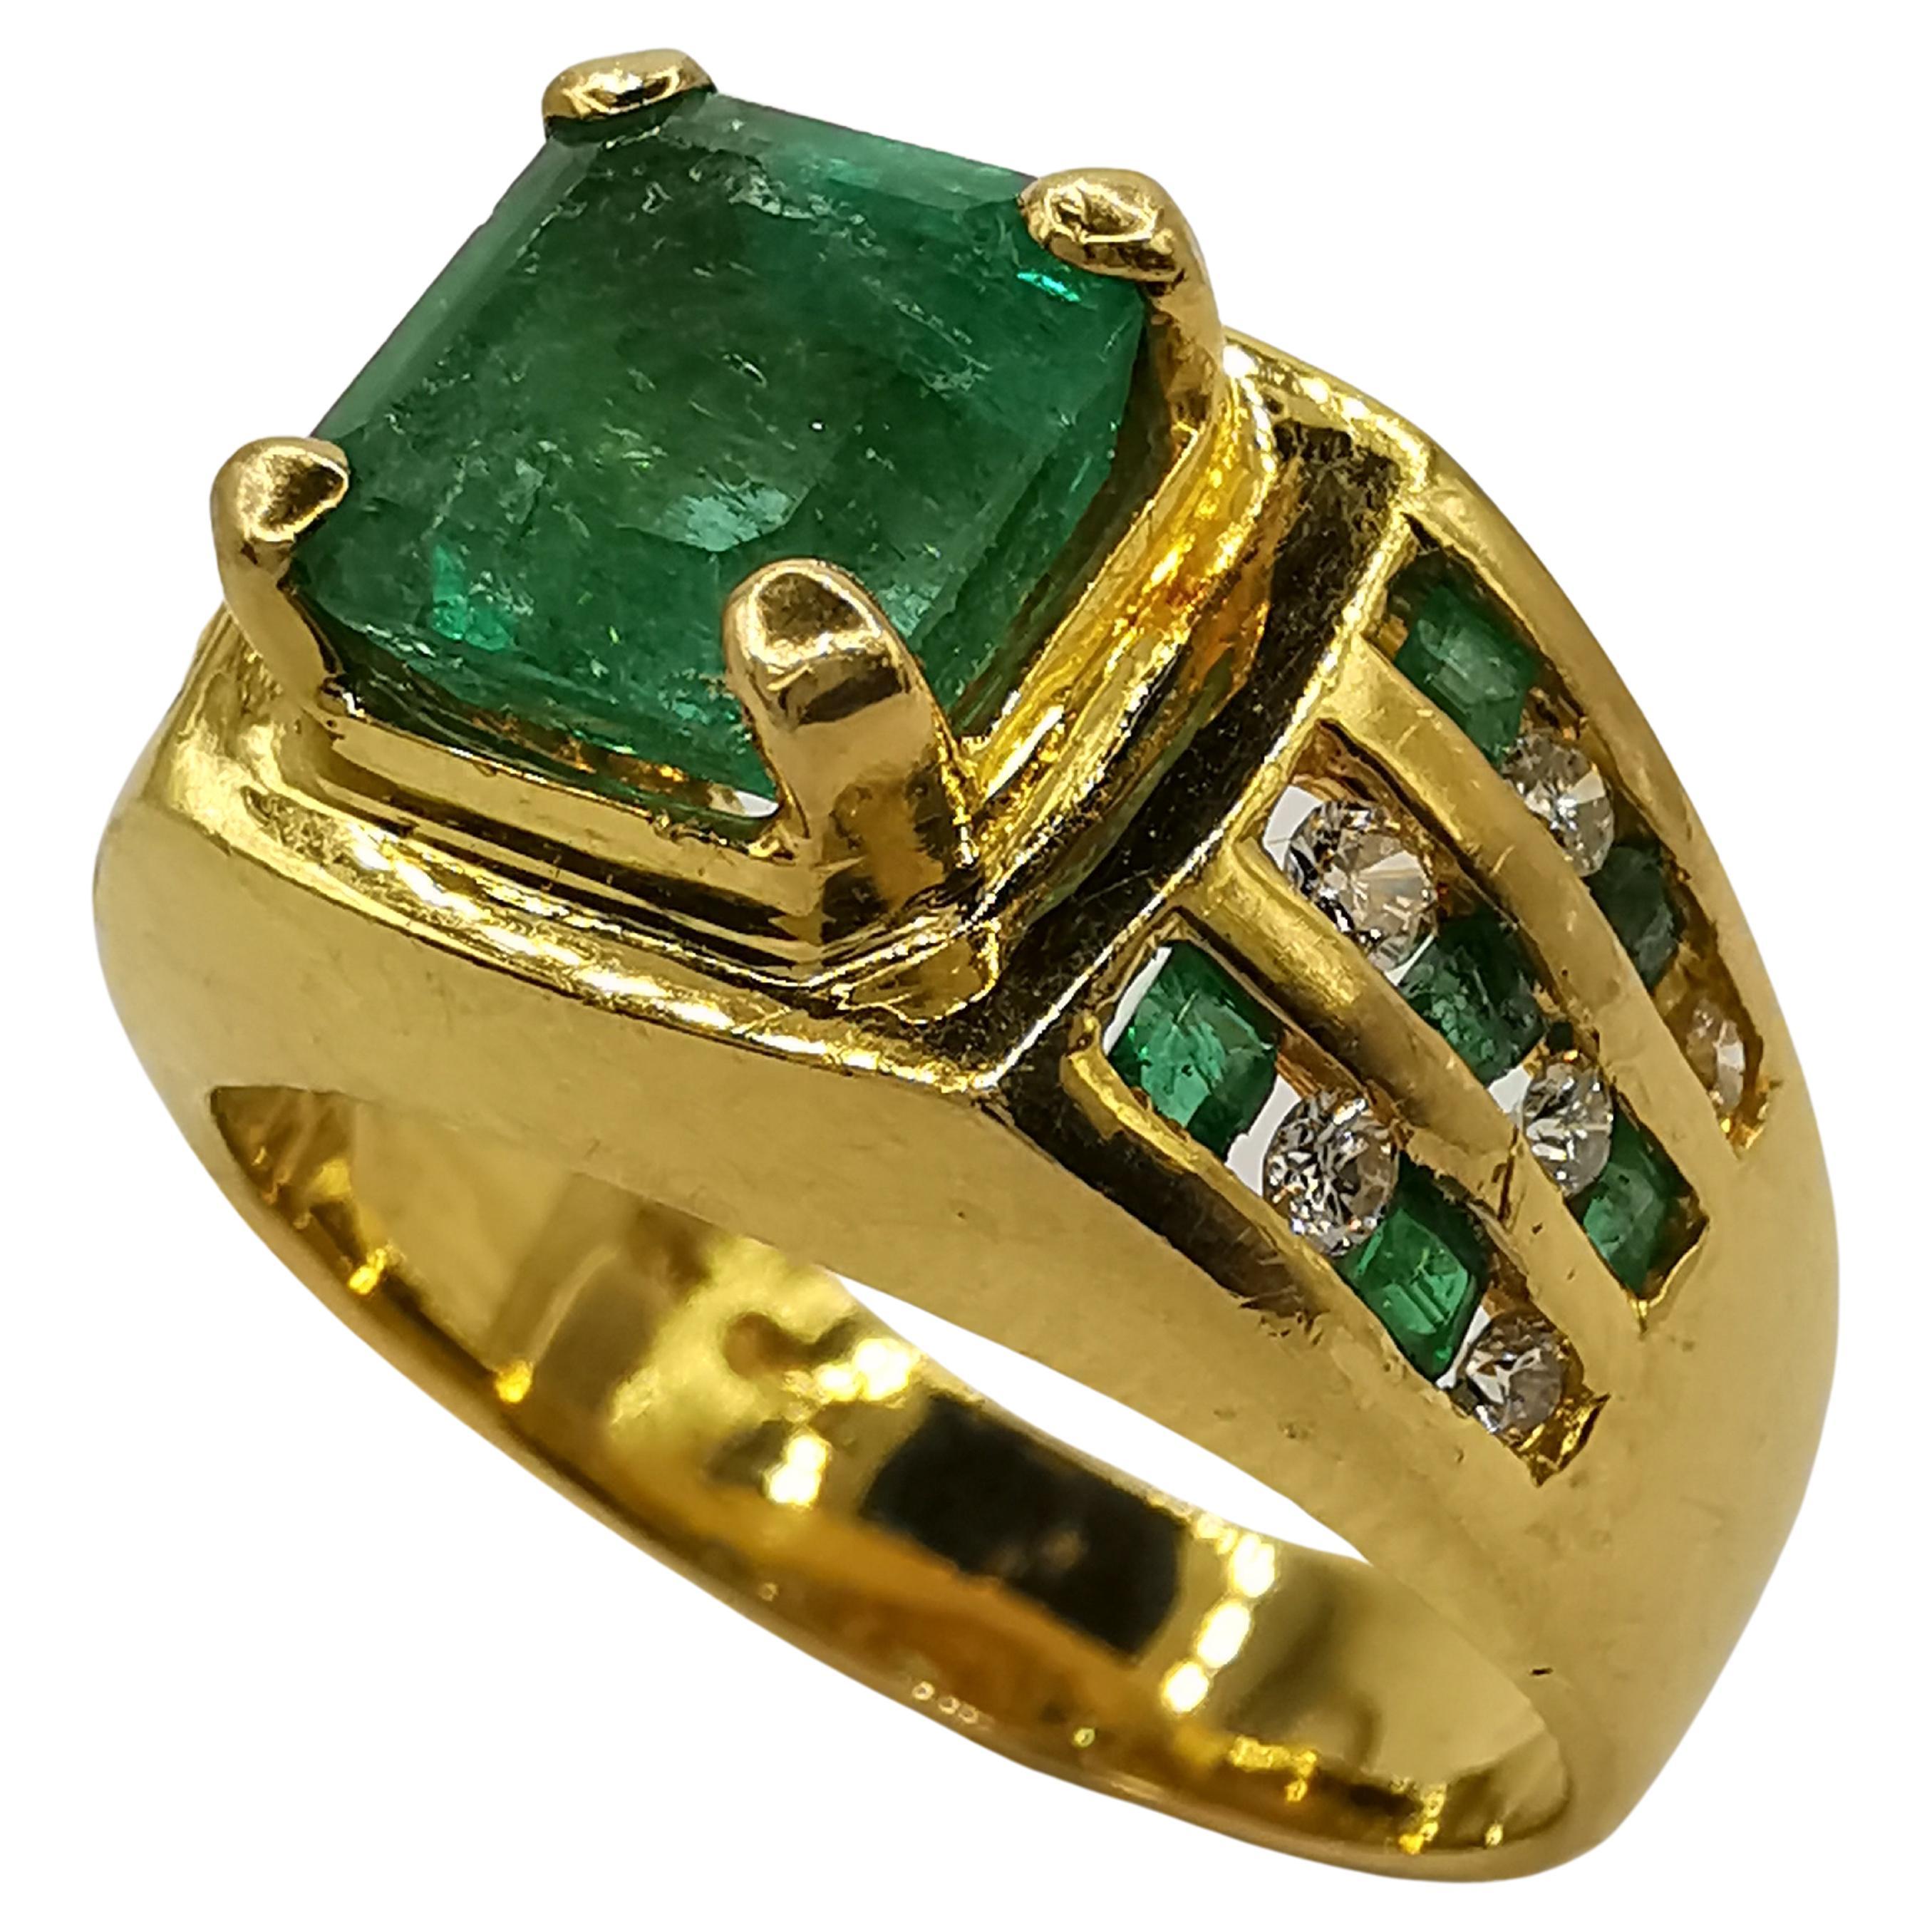 2.07 Carat Emerald Cut Emerald & Diamond Art Deco Men's Ring in 18K Yellow Gold For Sale